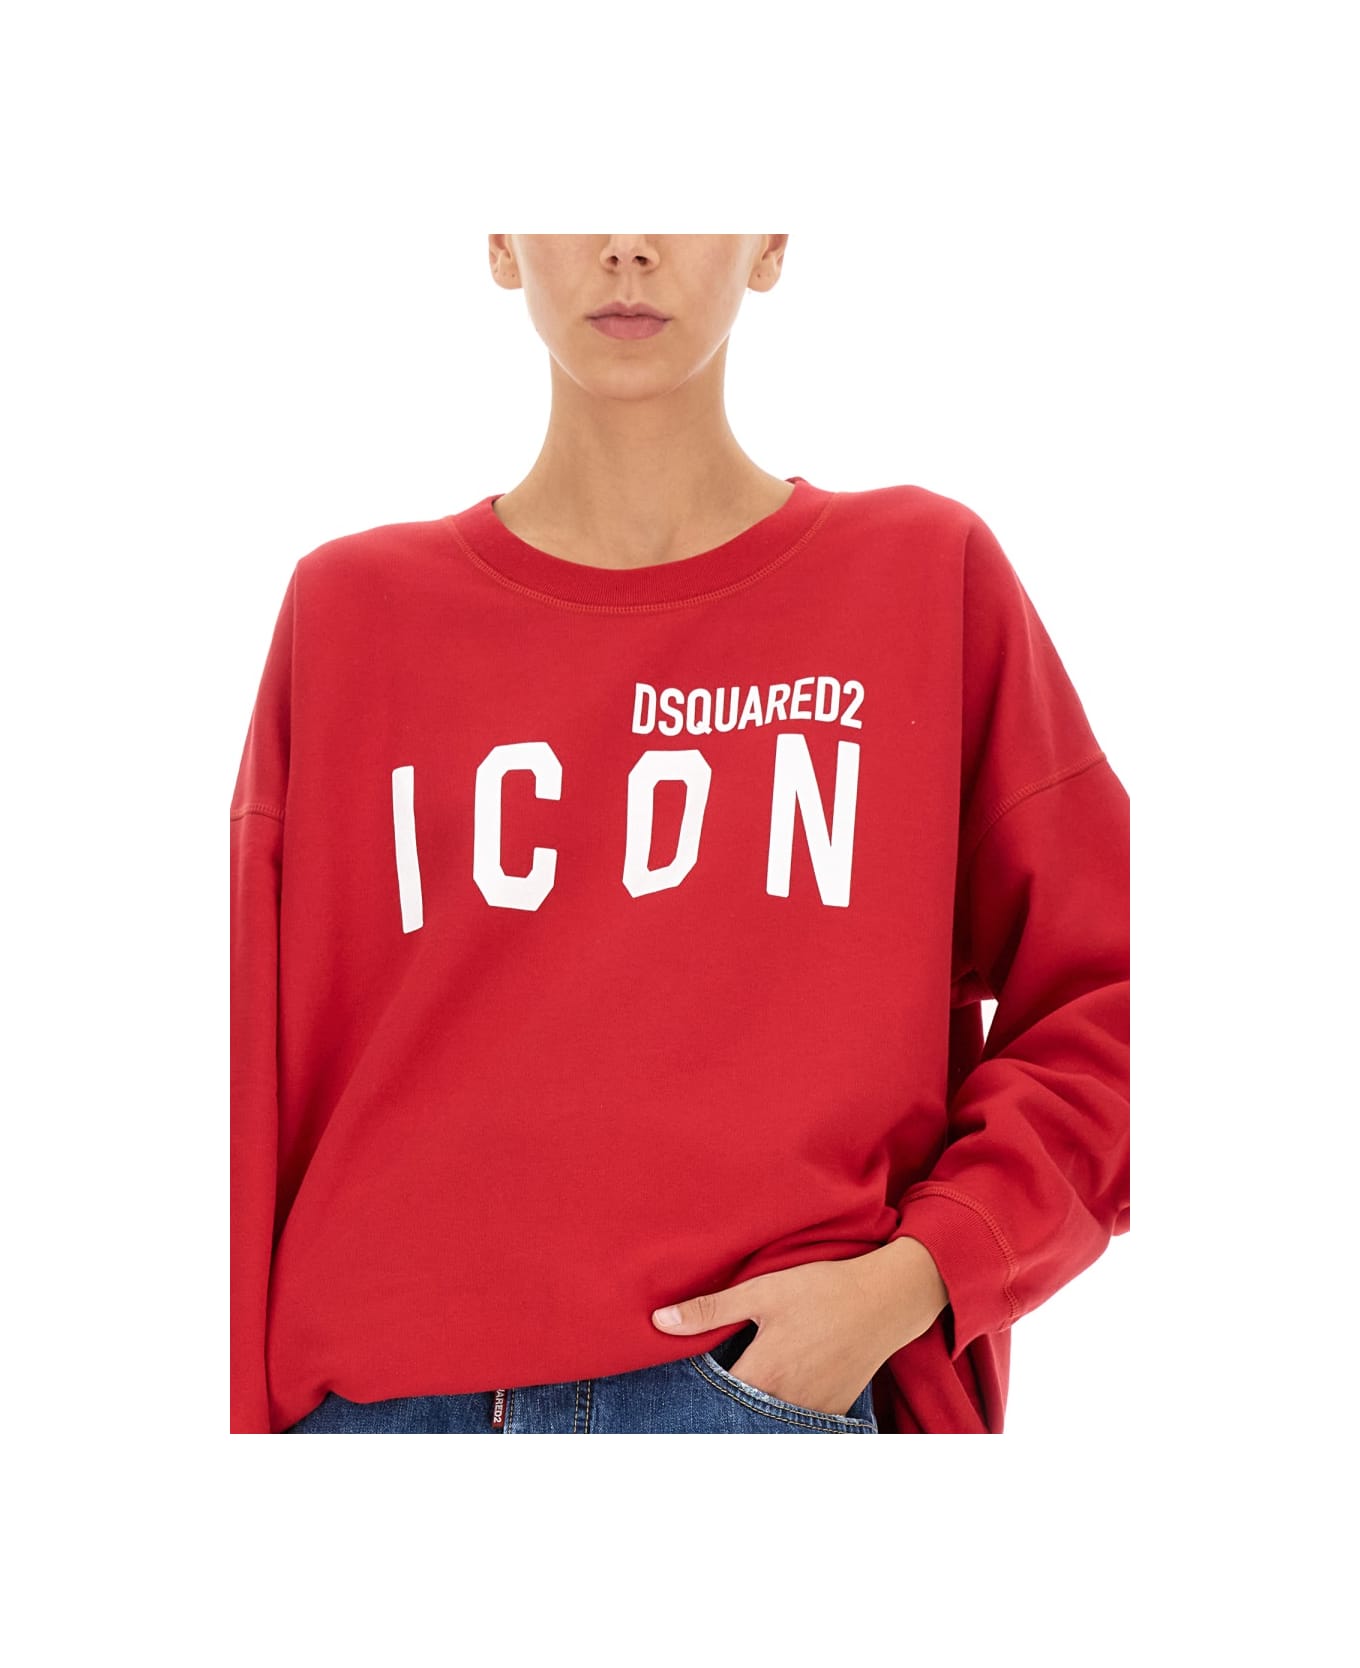 Dsquared2 "icon" Sweatshirt - RED